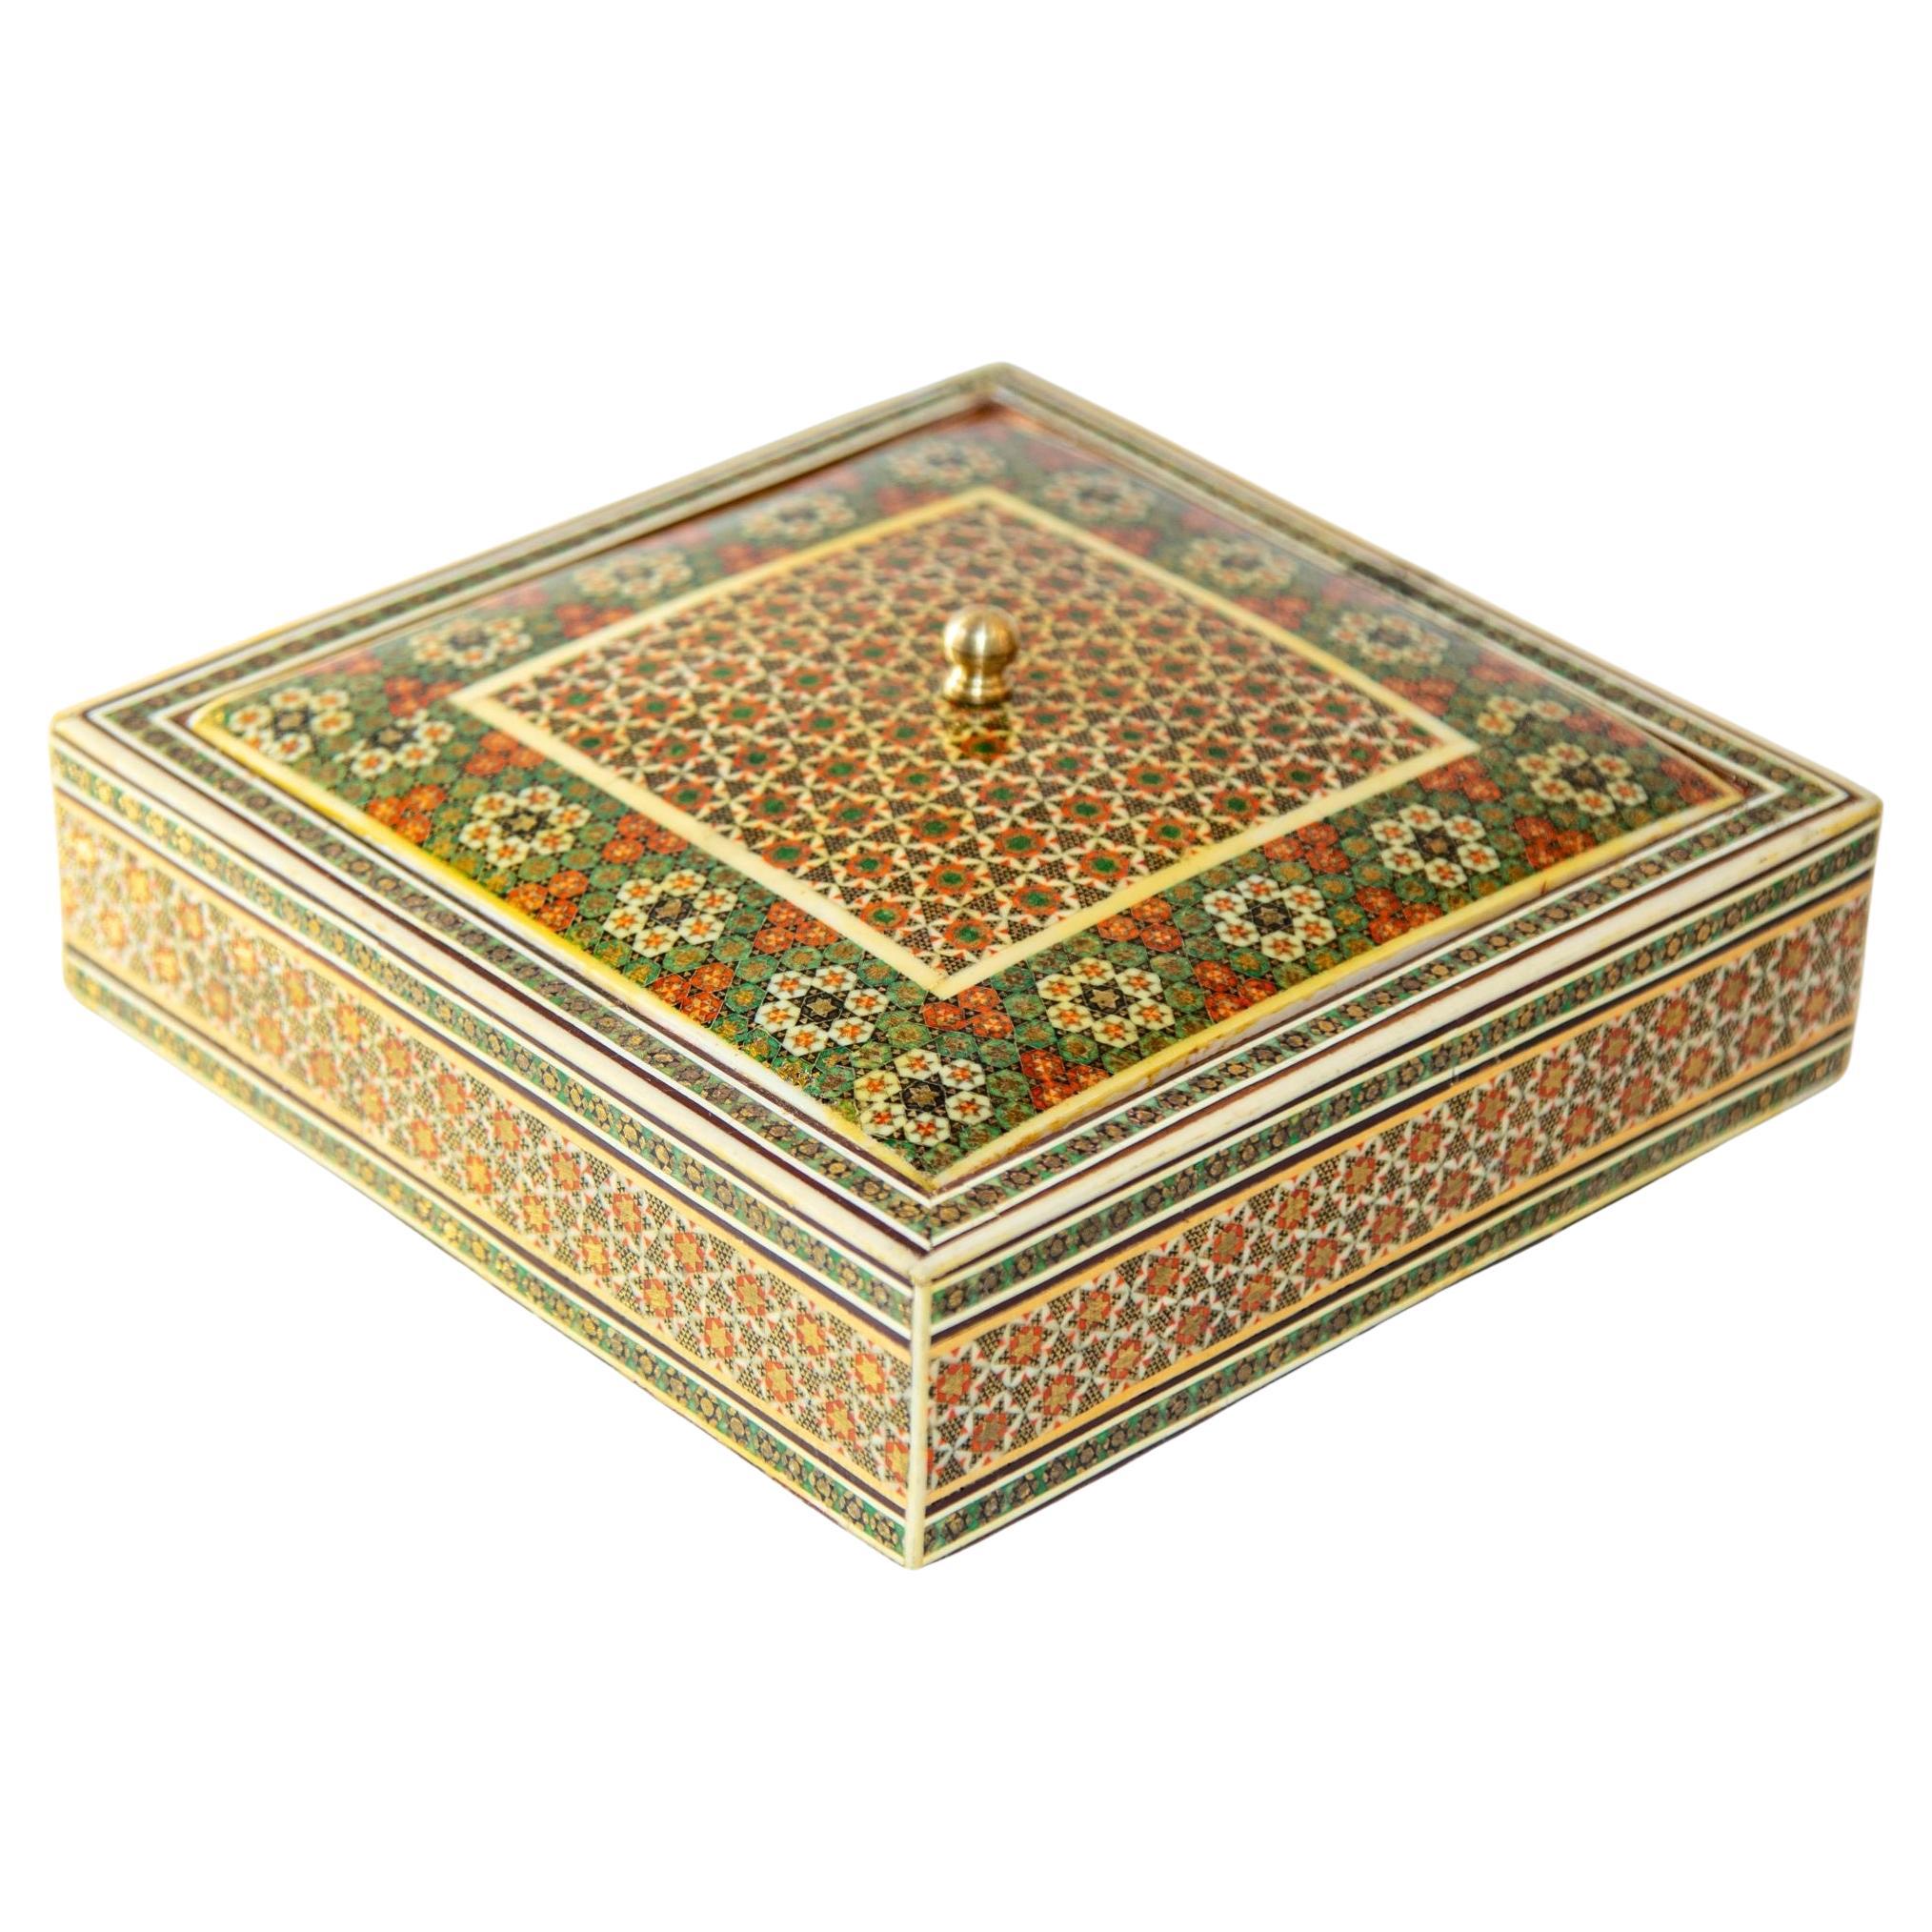 1950s Anglo Indian Micro Sadeli Mosaic Inlaid Jewelry Box